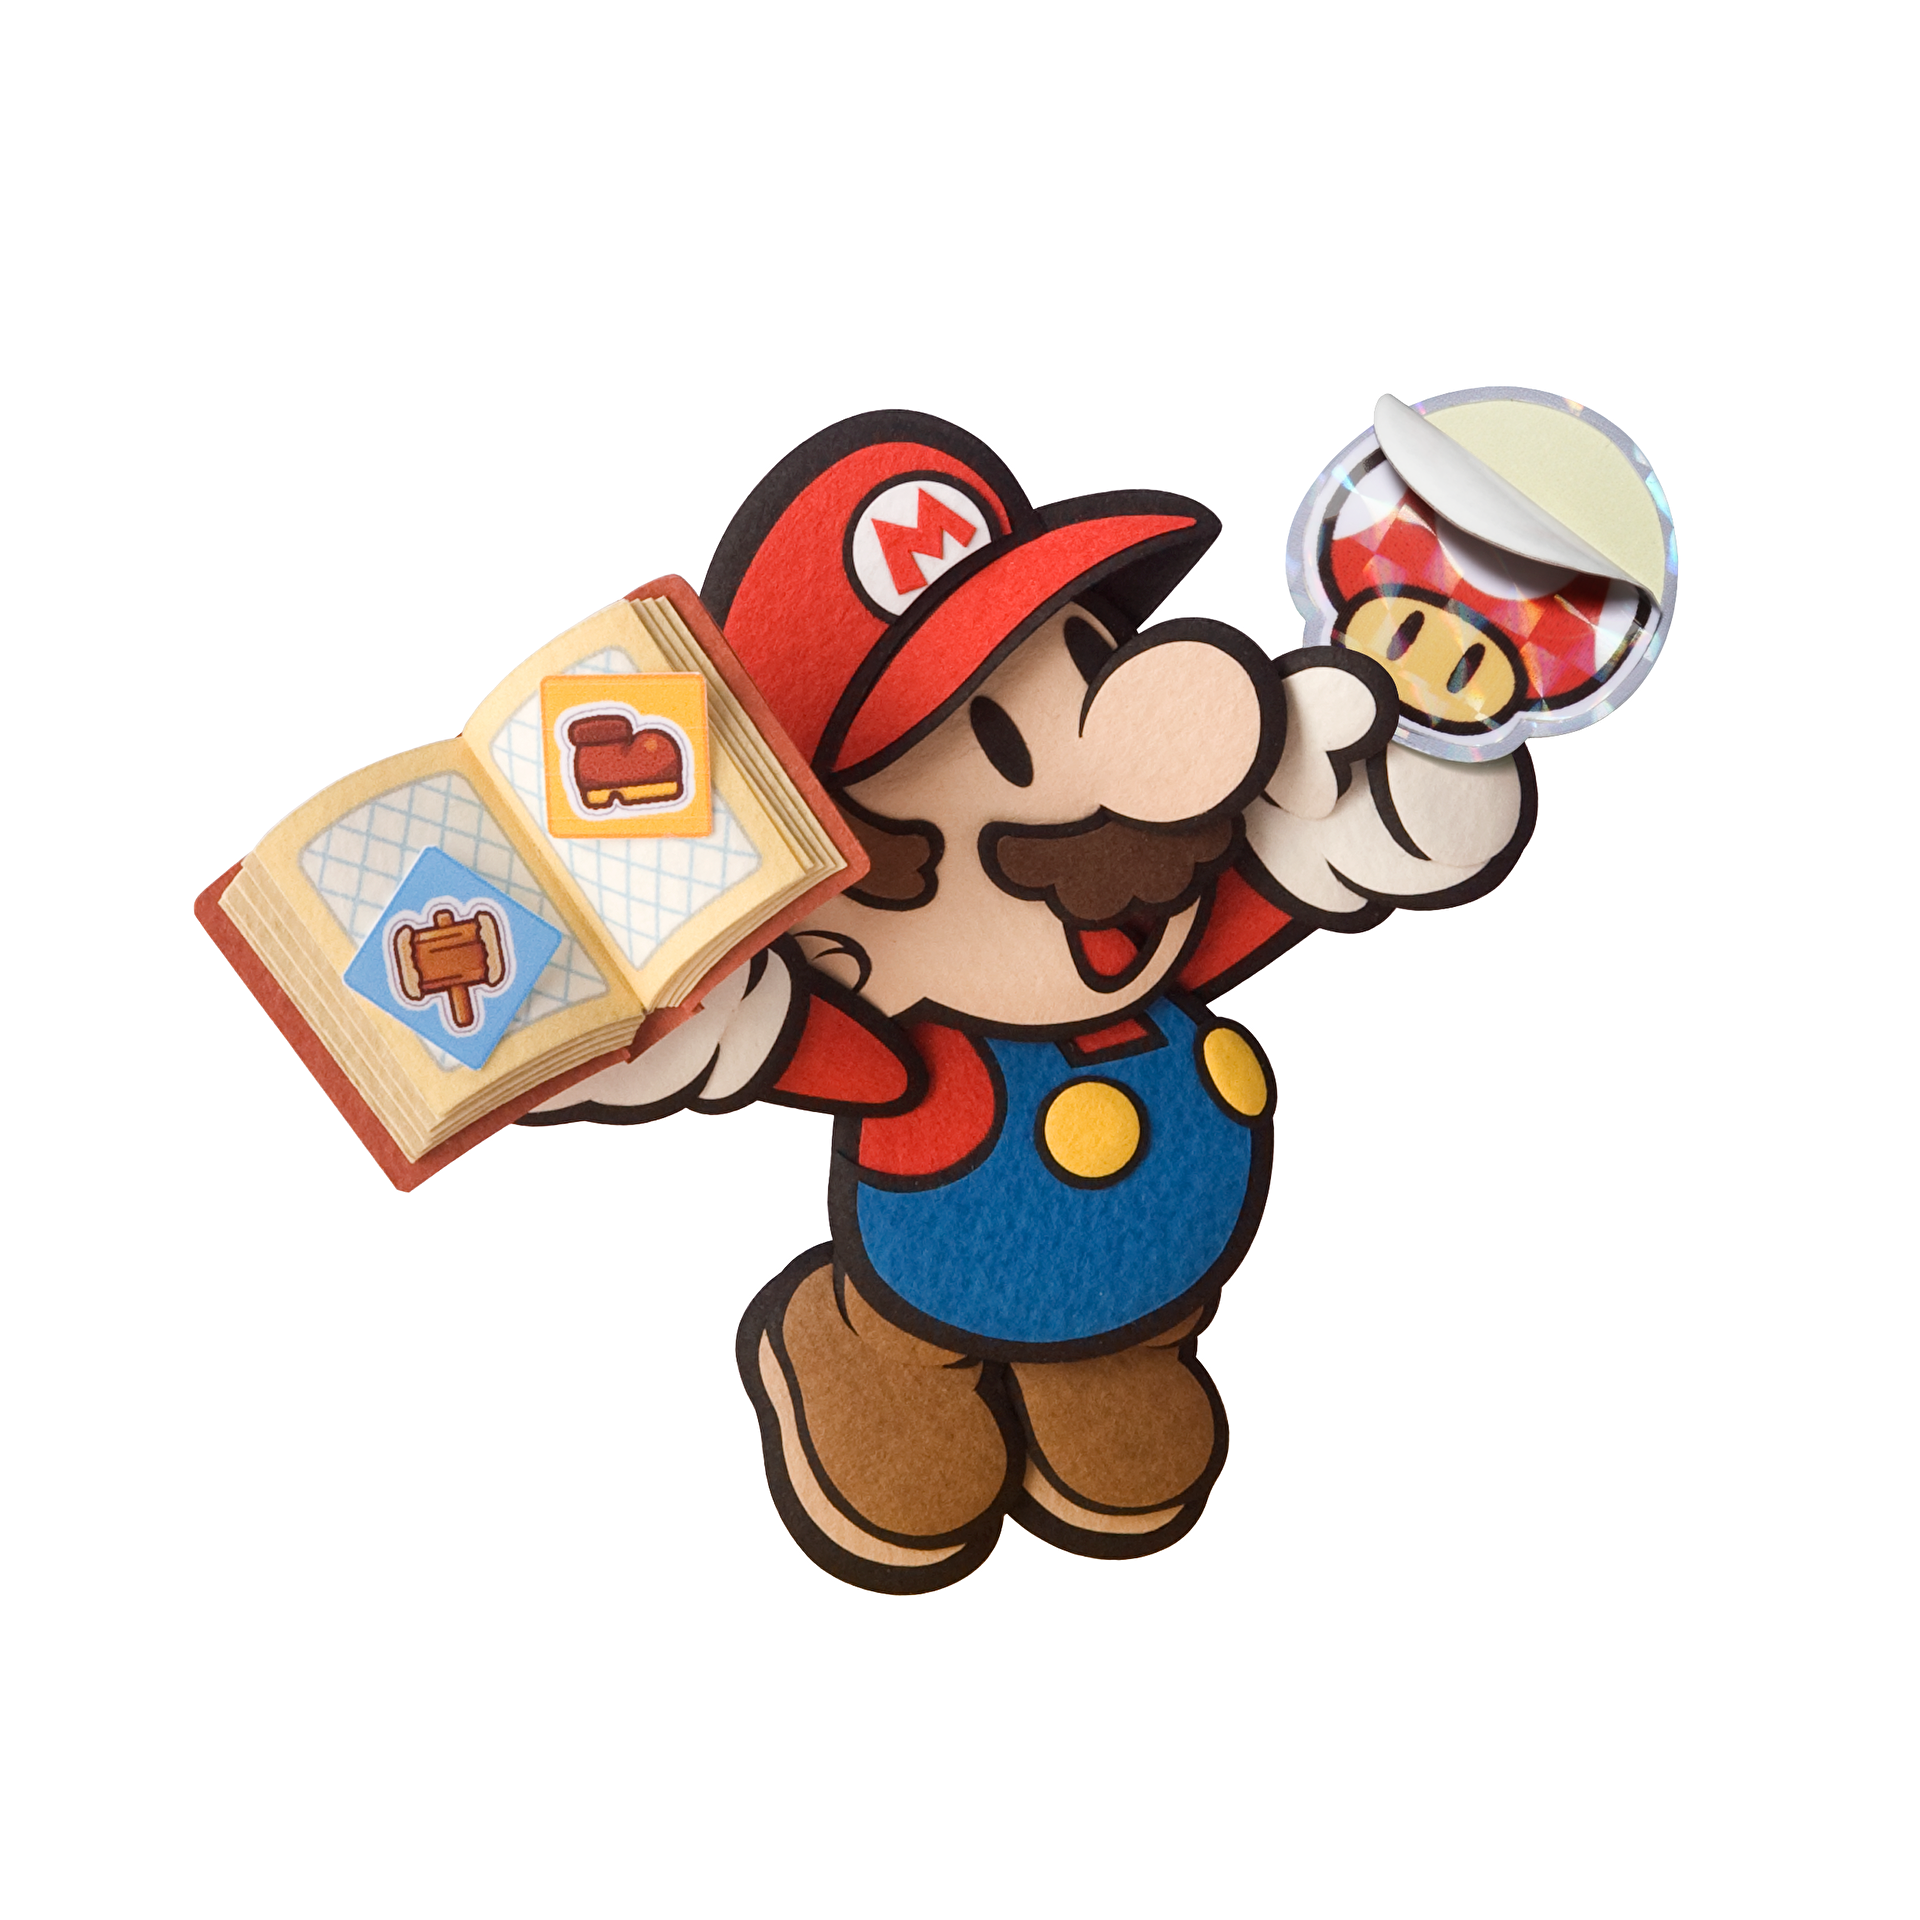 Paper Mario: Sticker Star Review - Review - Nintendo World Report